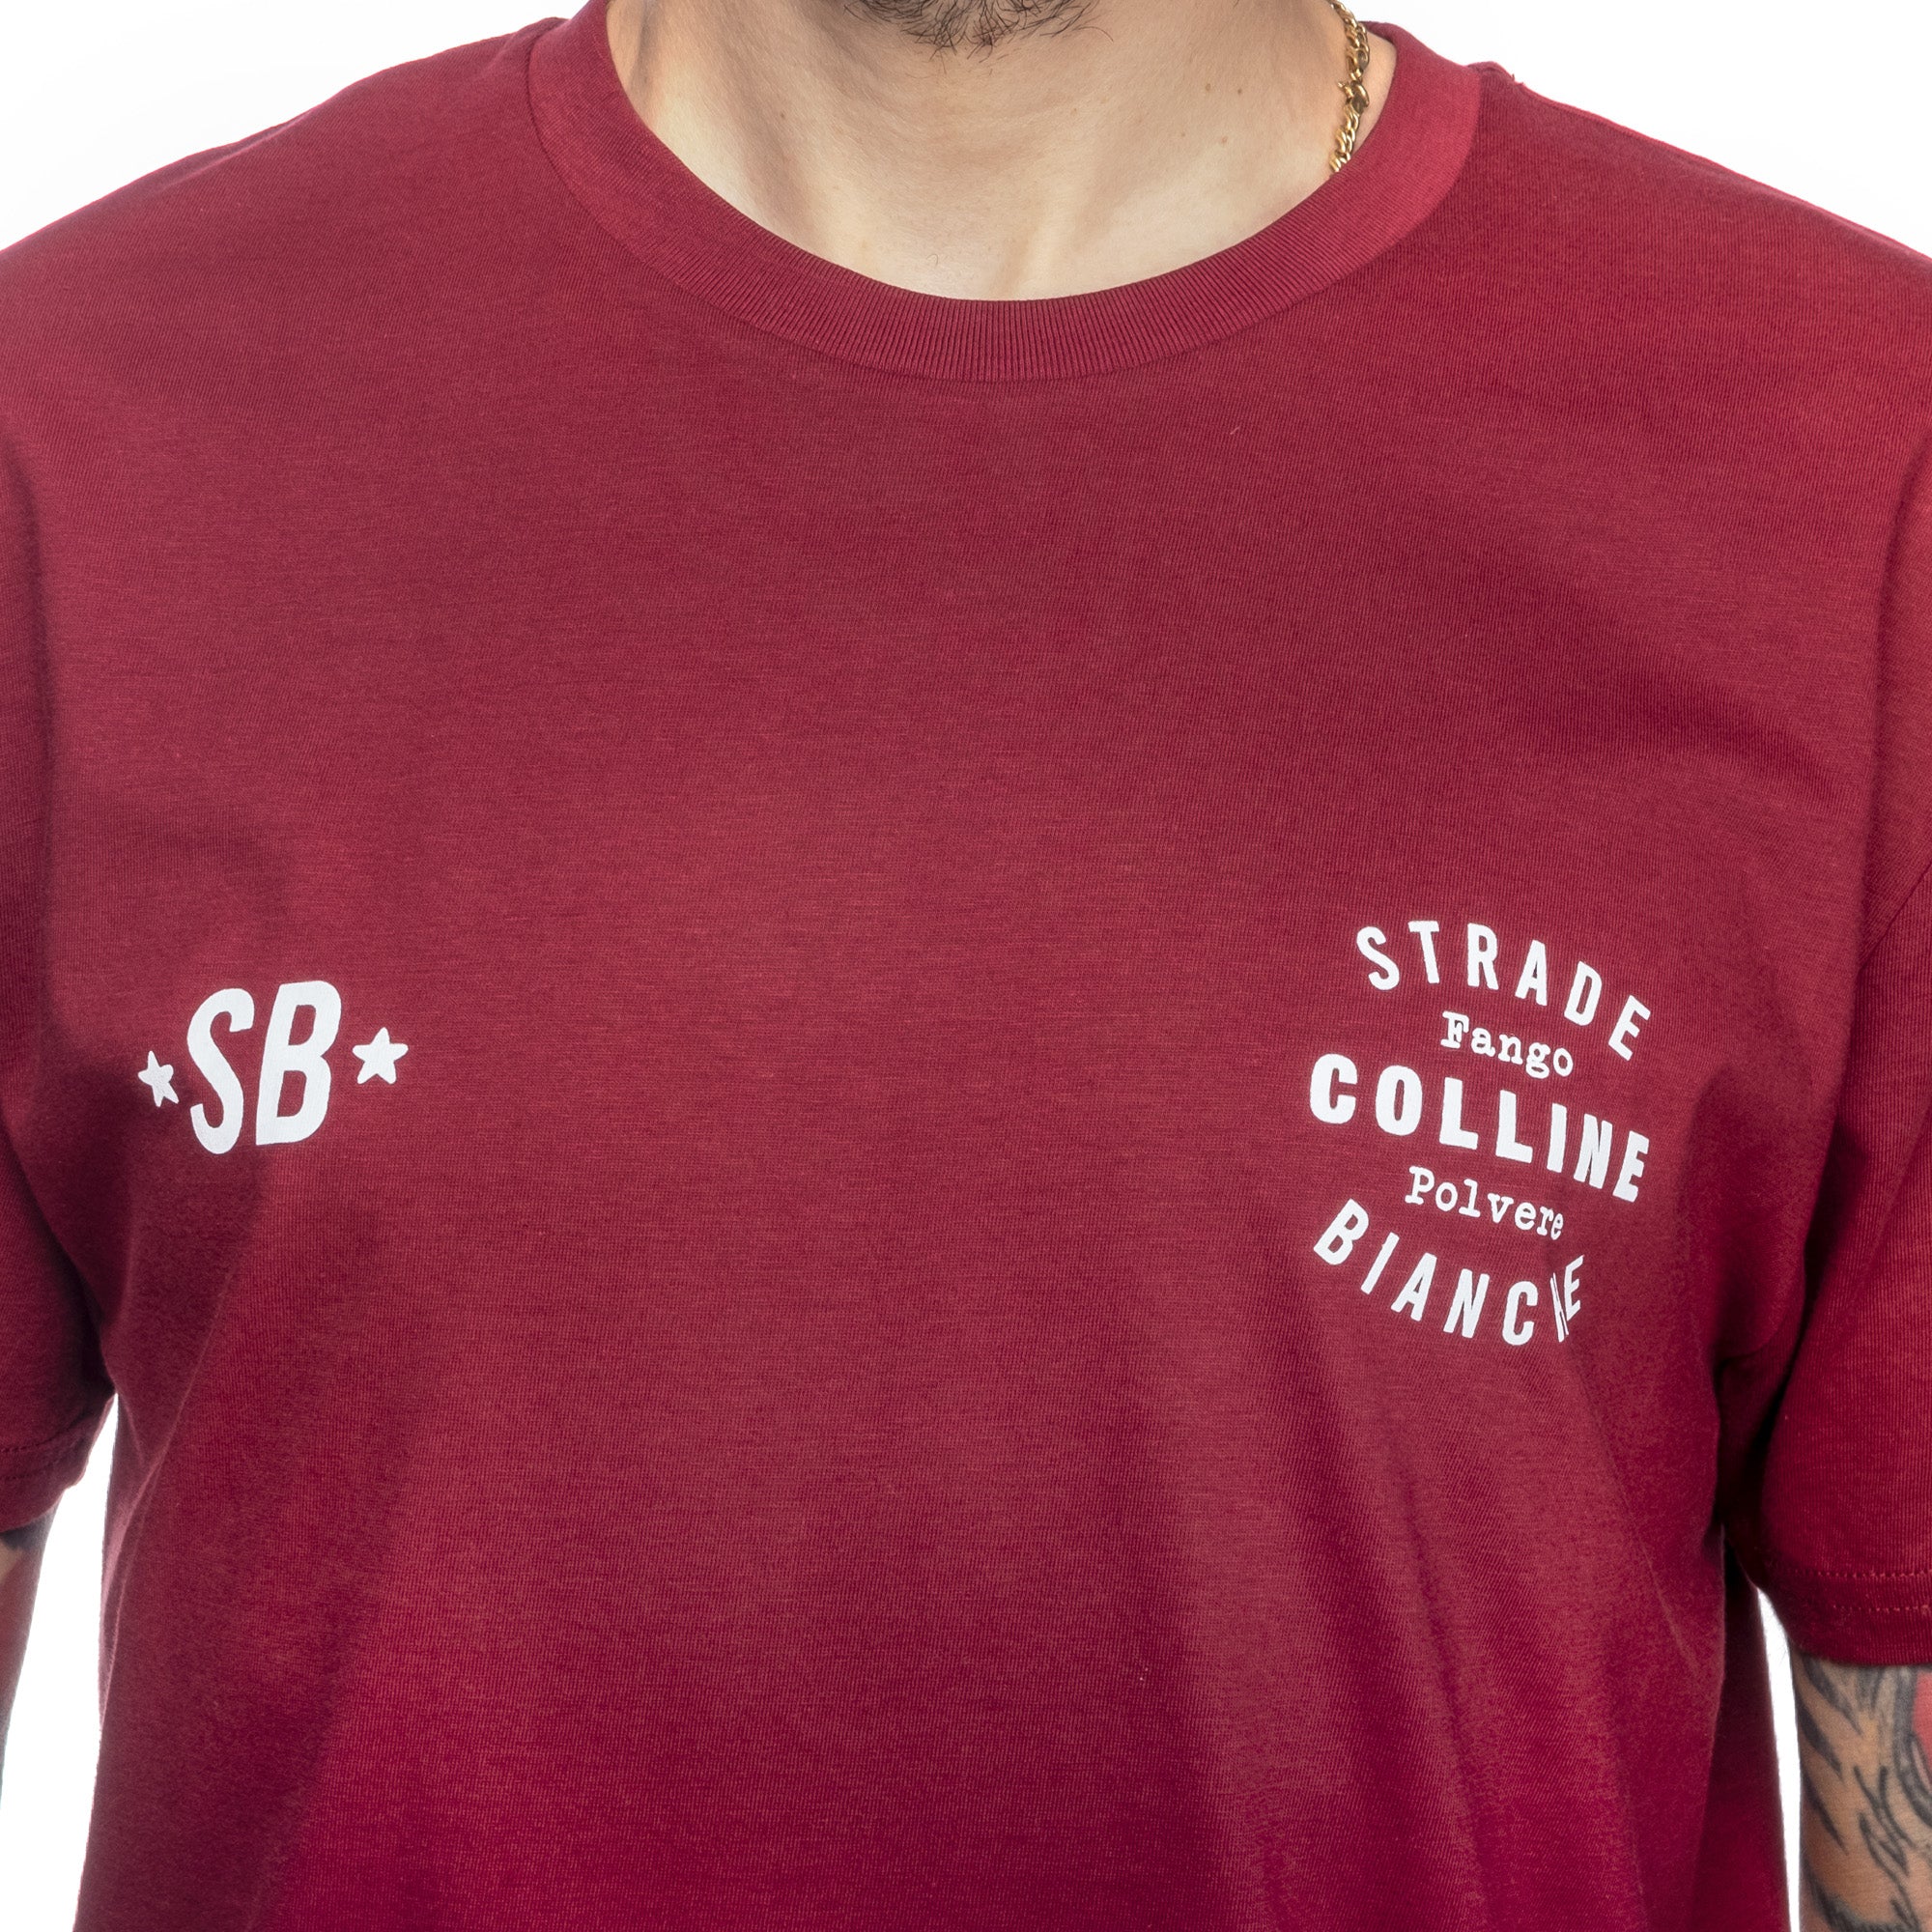 Camiseta Strade Bianche - Colinas